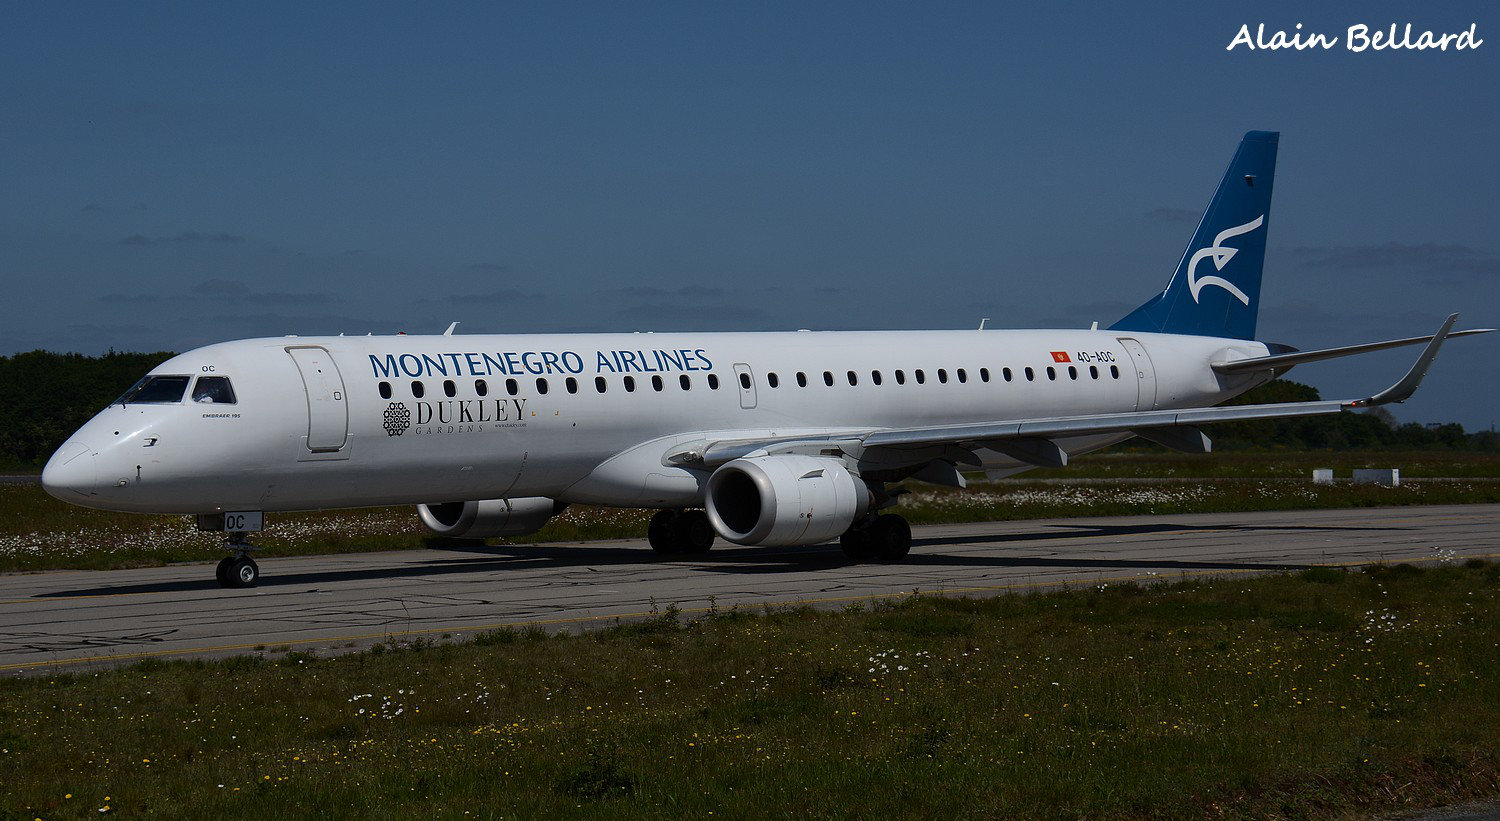 montenegro - [17/05/2015] Embraer 190-200LR (4O-AOC) Montenegro Airlines "Dukley sticker" Vzzb